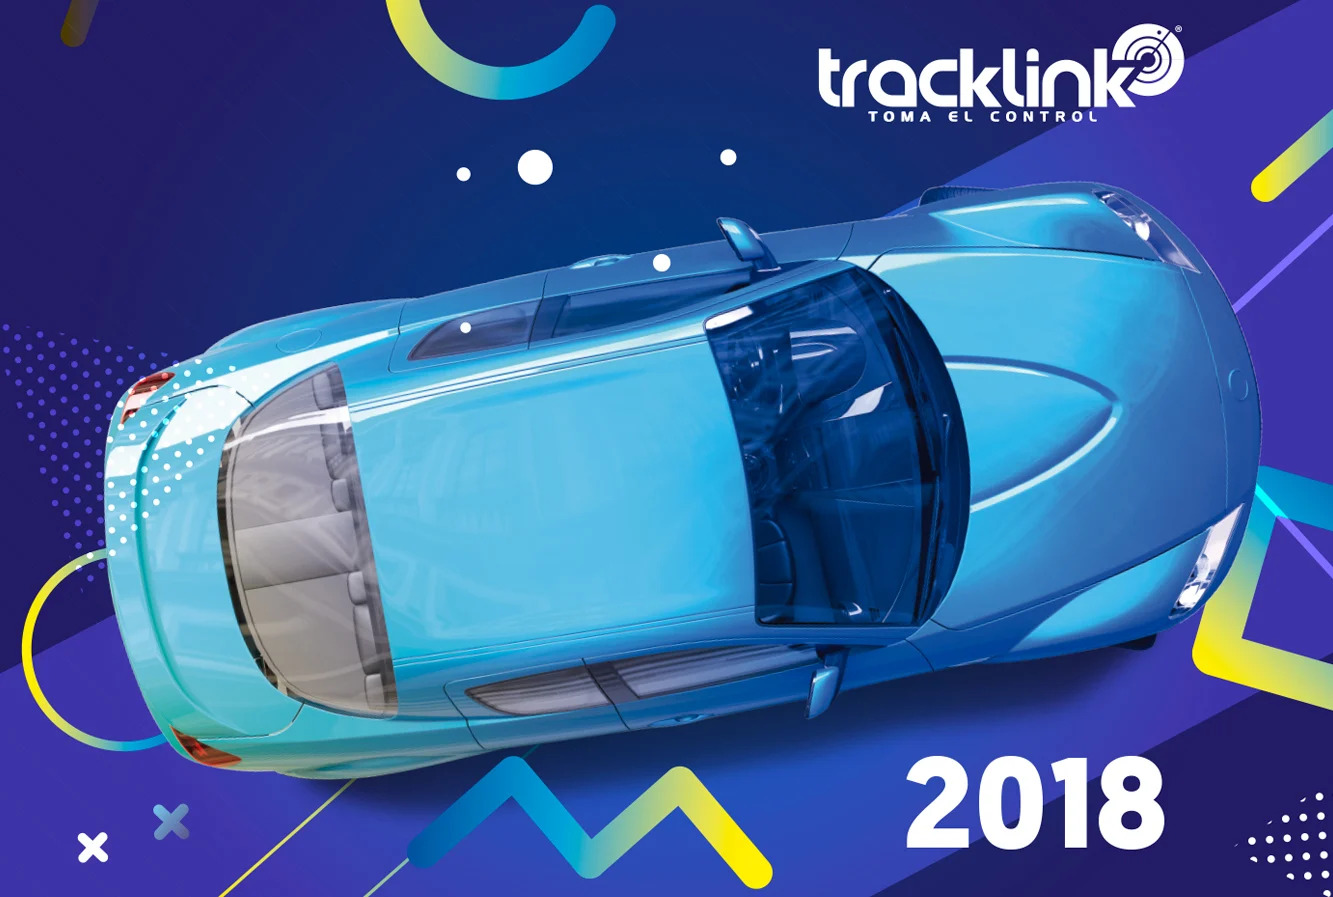 Centrico Digital branding for Tracklink